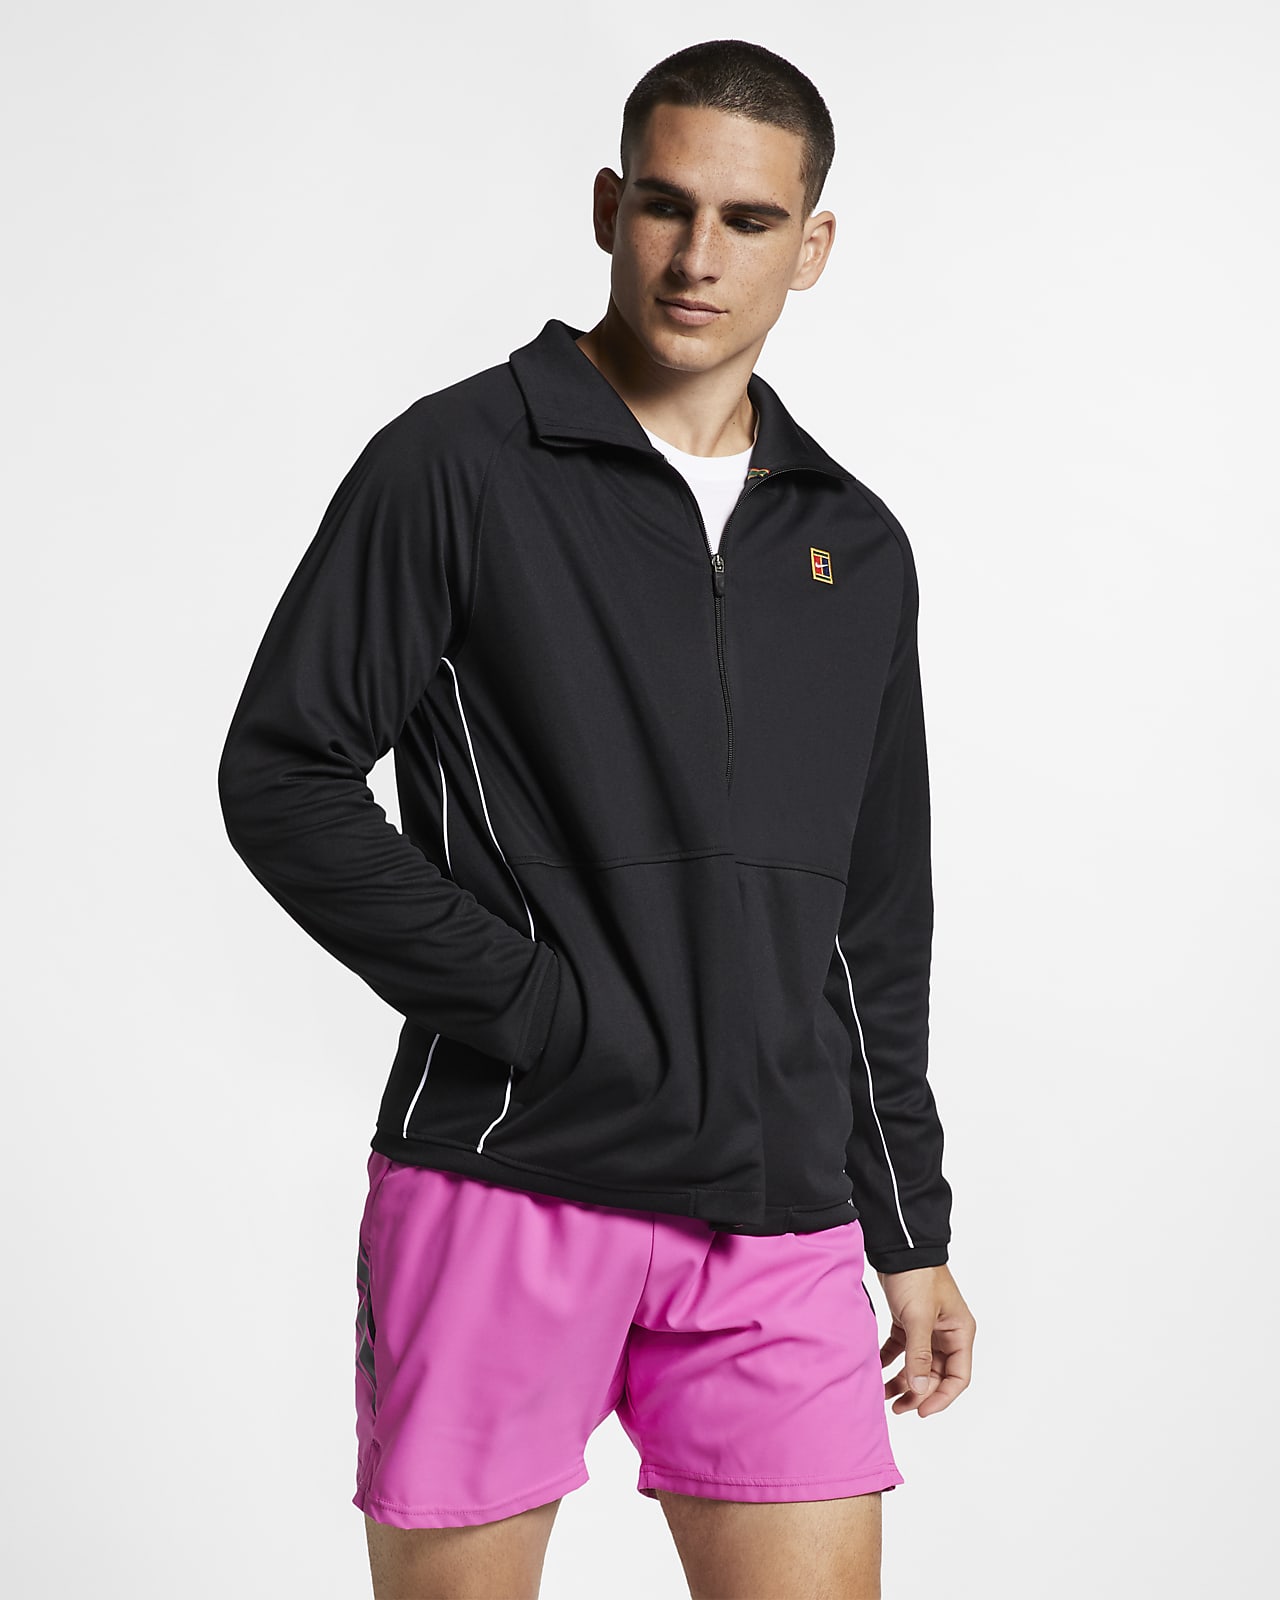 Мужская теннисная куртка NikeCourt. Nike RU